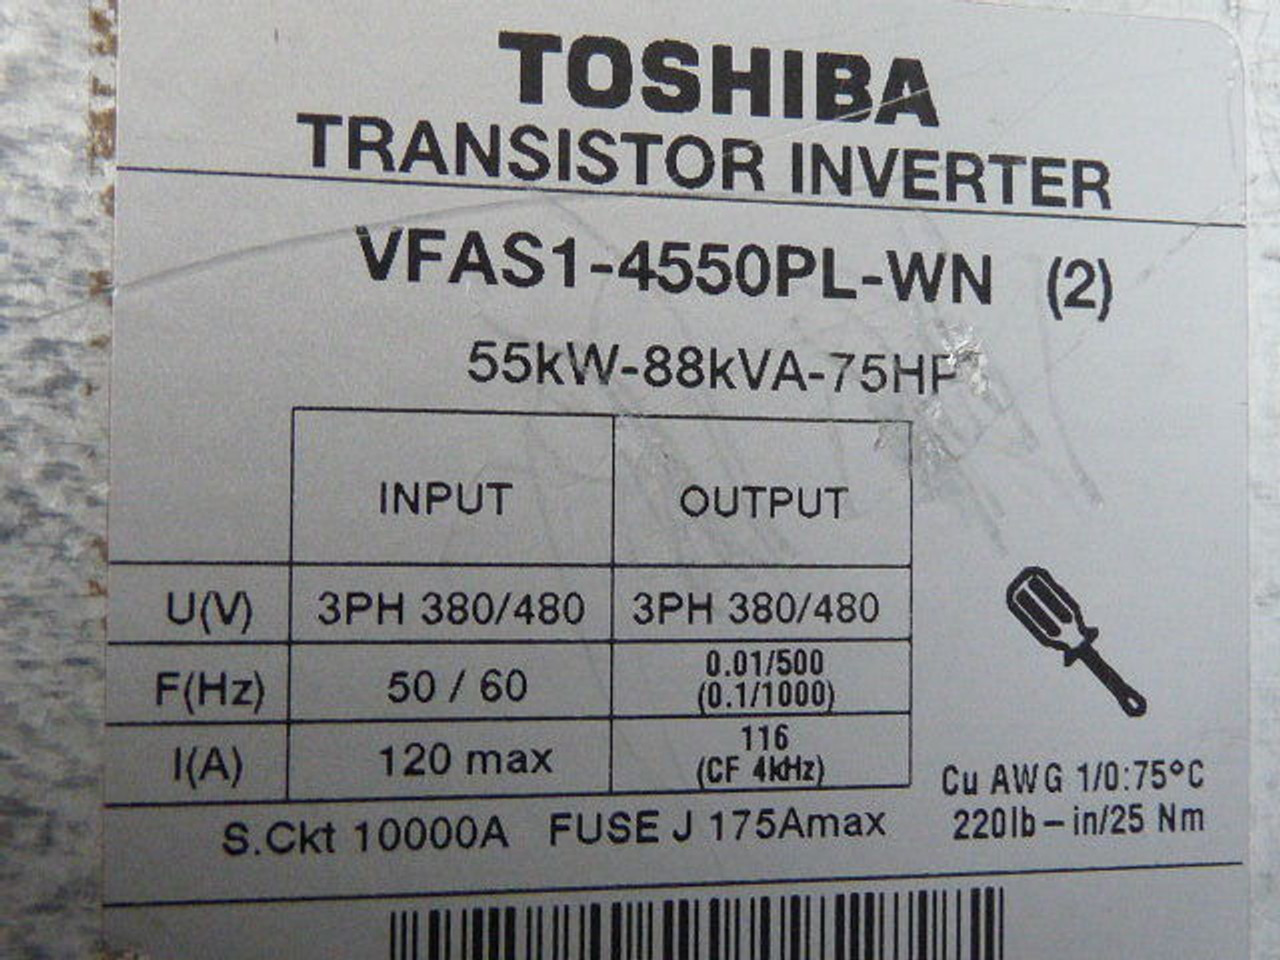 Toshiba VFAS1-4550PL-WN Transistor Inverter Drive 75HP 55kW 88kVA 380/480V USED